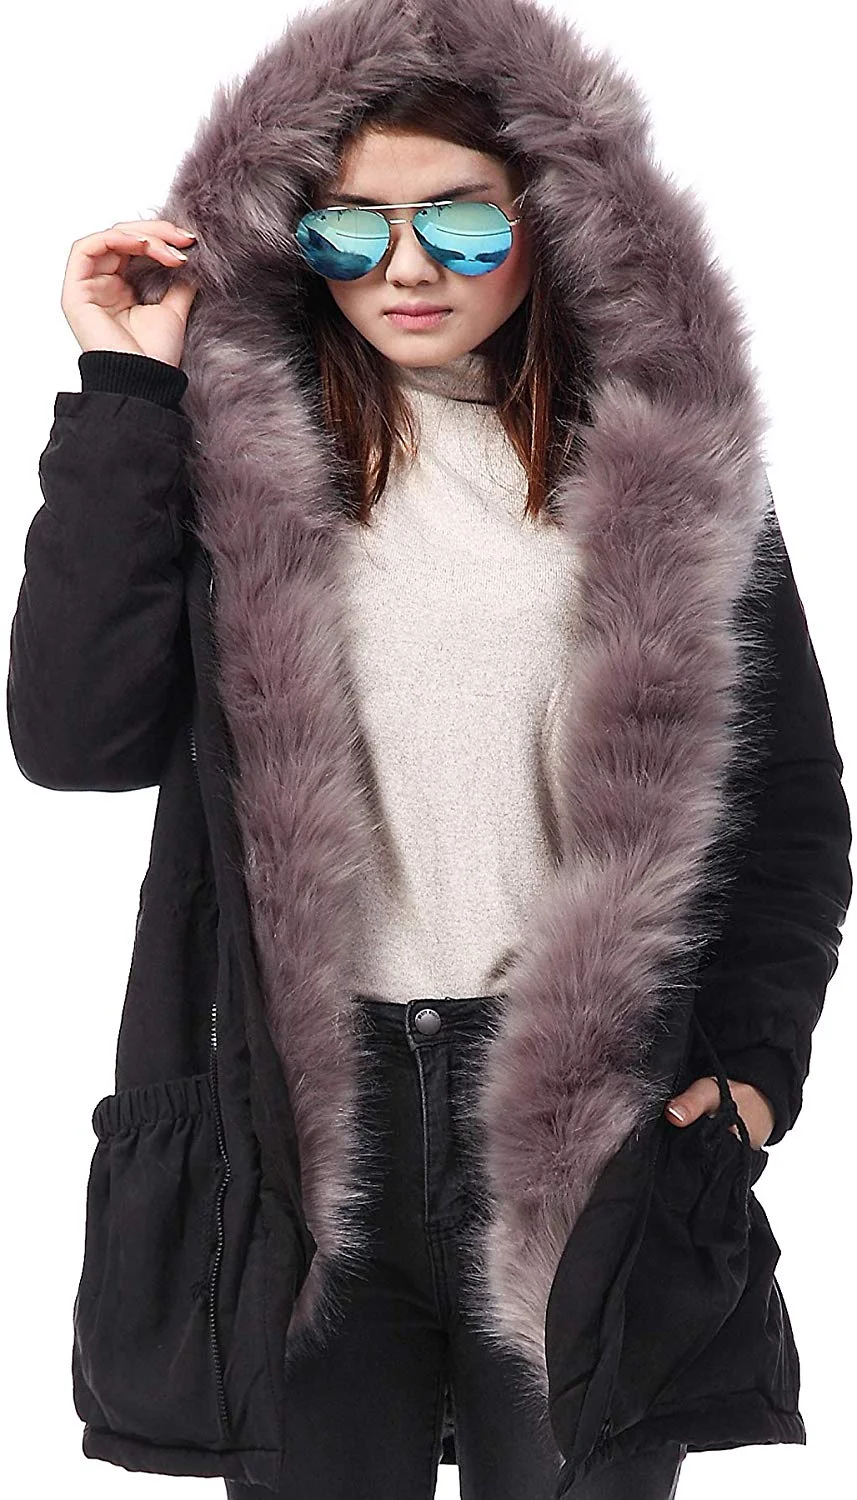 Winter Thicken Faux Fur Hooded Plus Size Parka Jacket Coat Size S-3XL for women